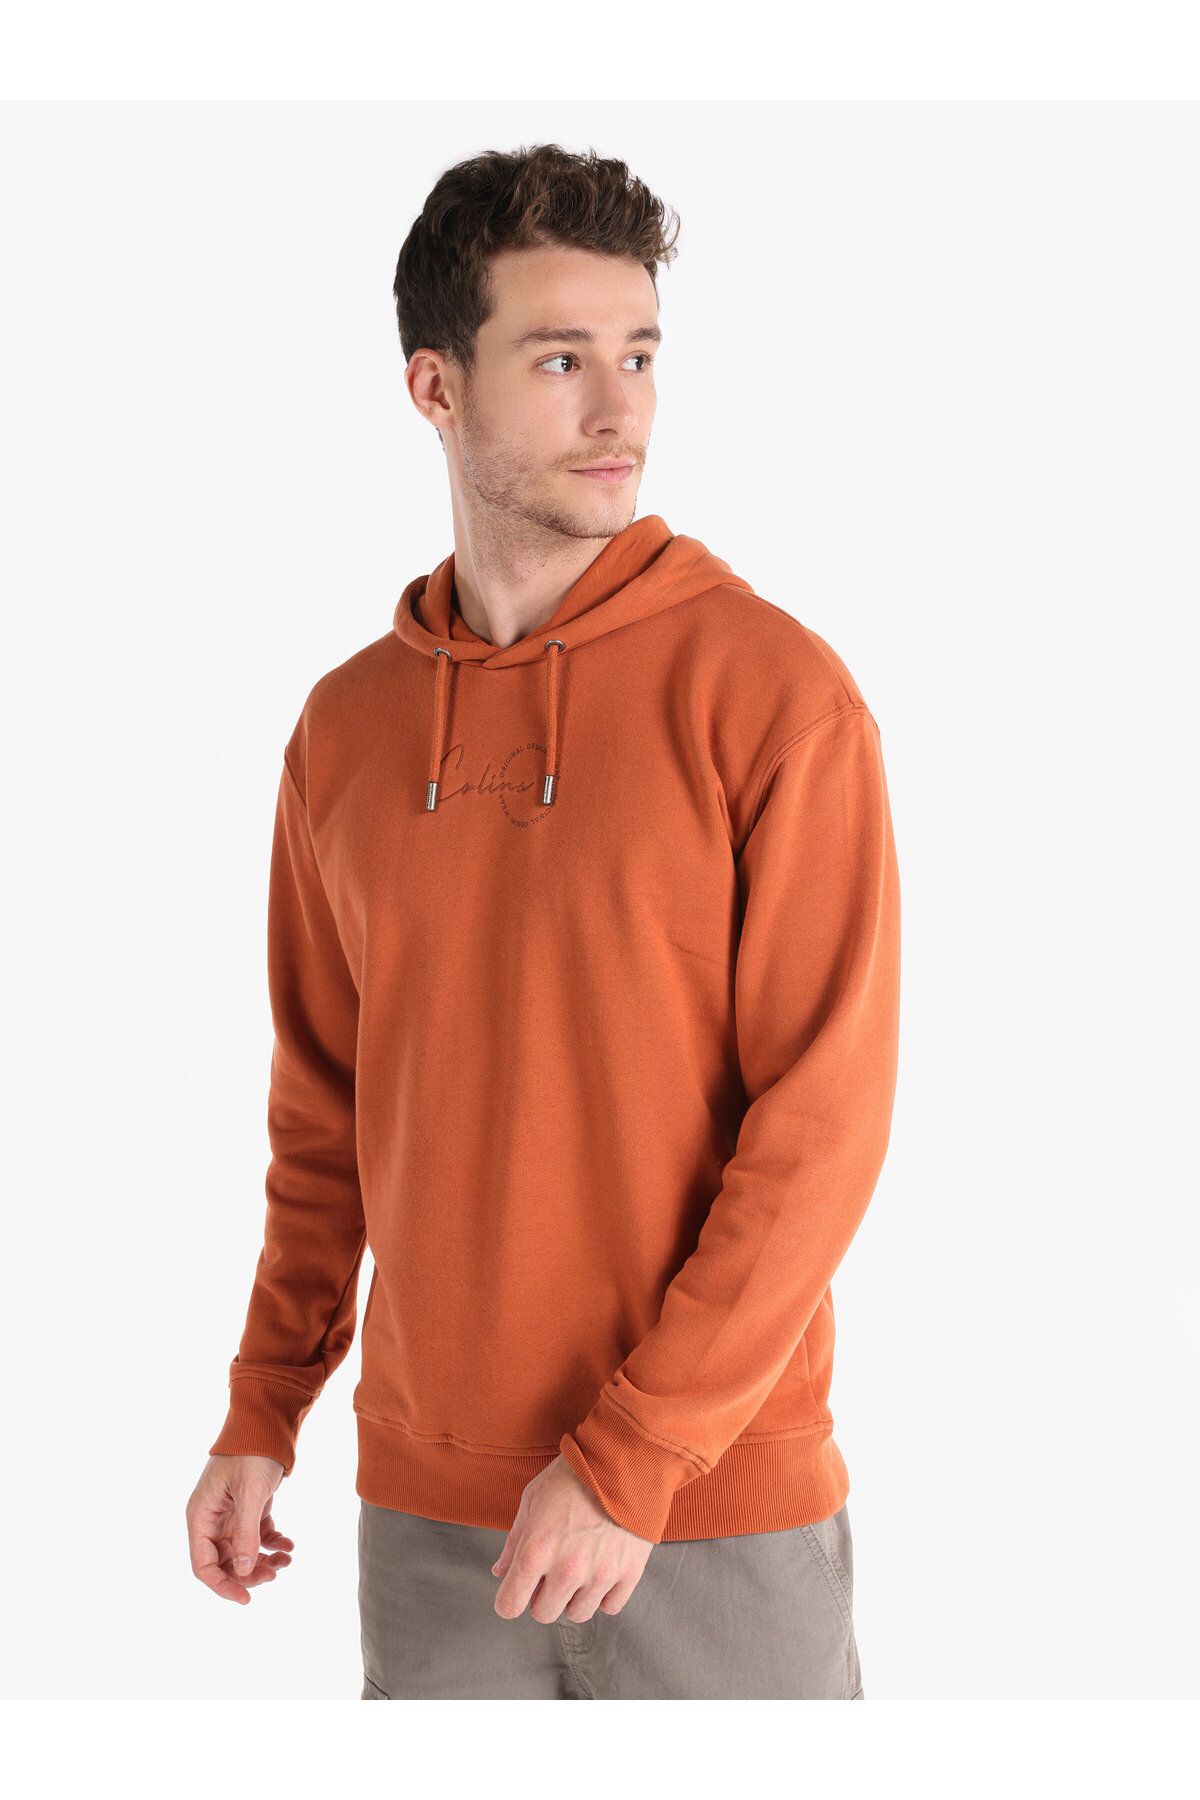 Colin’s پیراهن مردانه نارنجی به طور منظم و مناسب